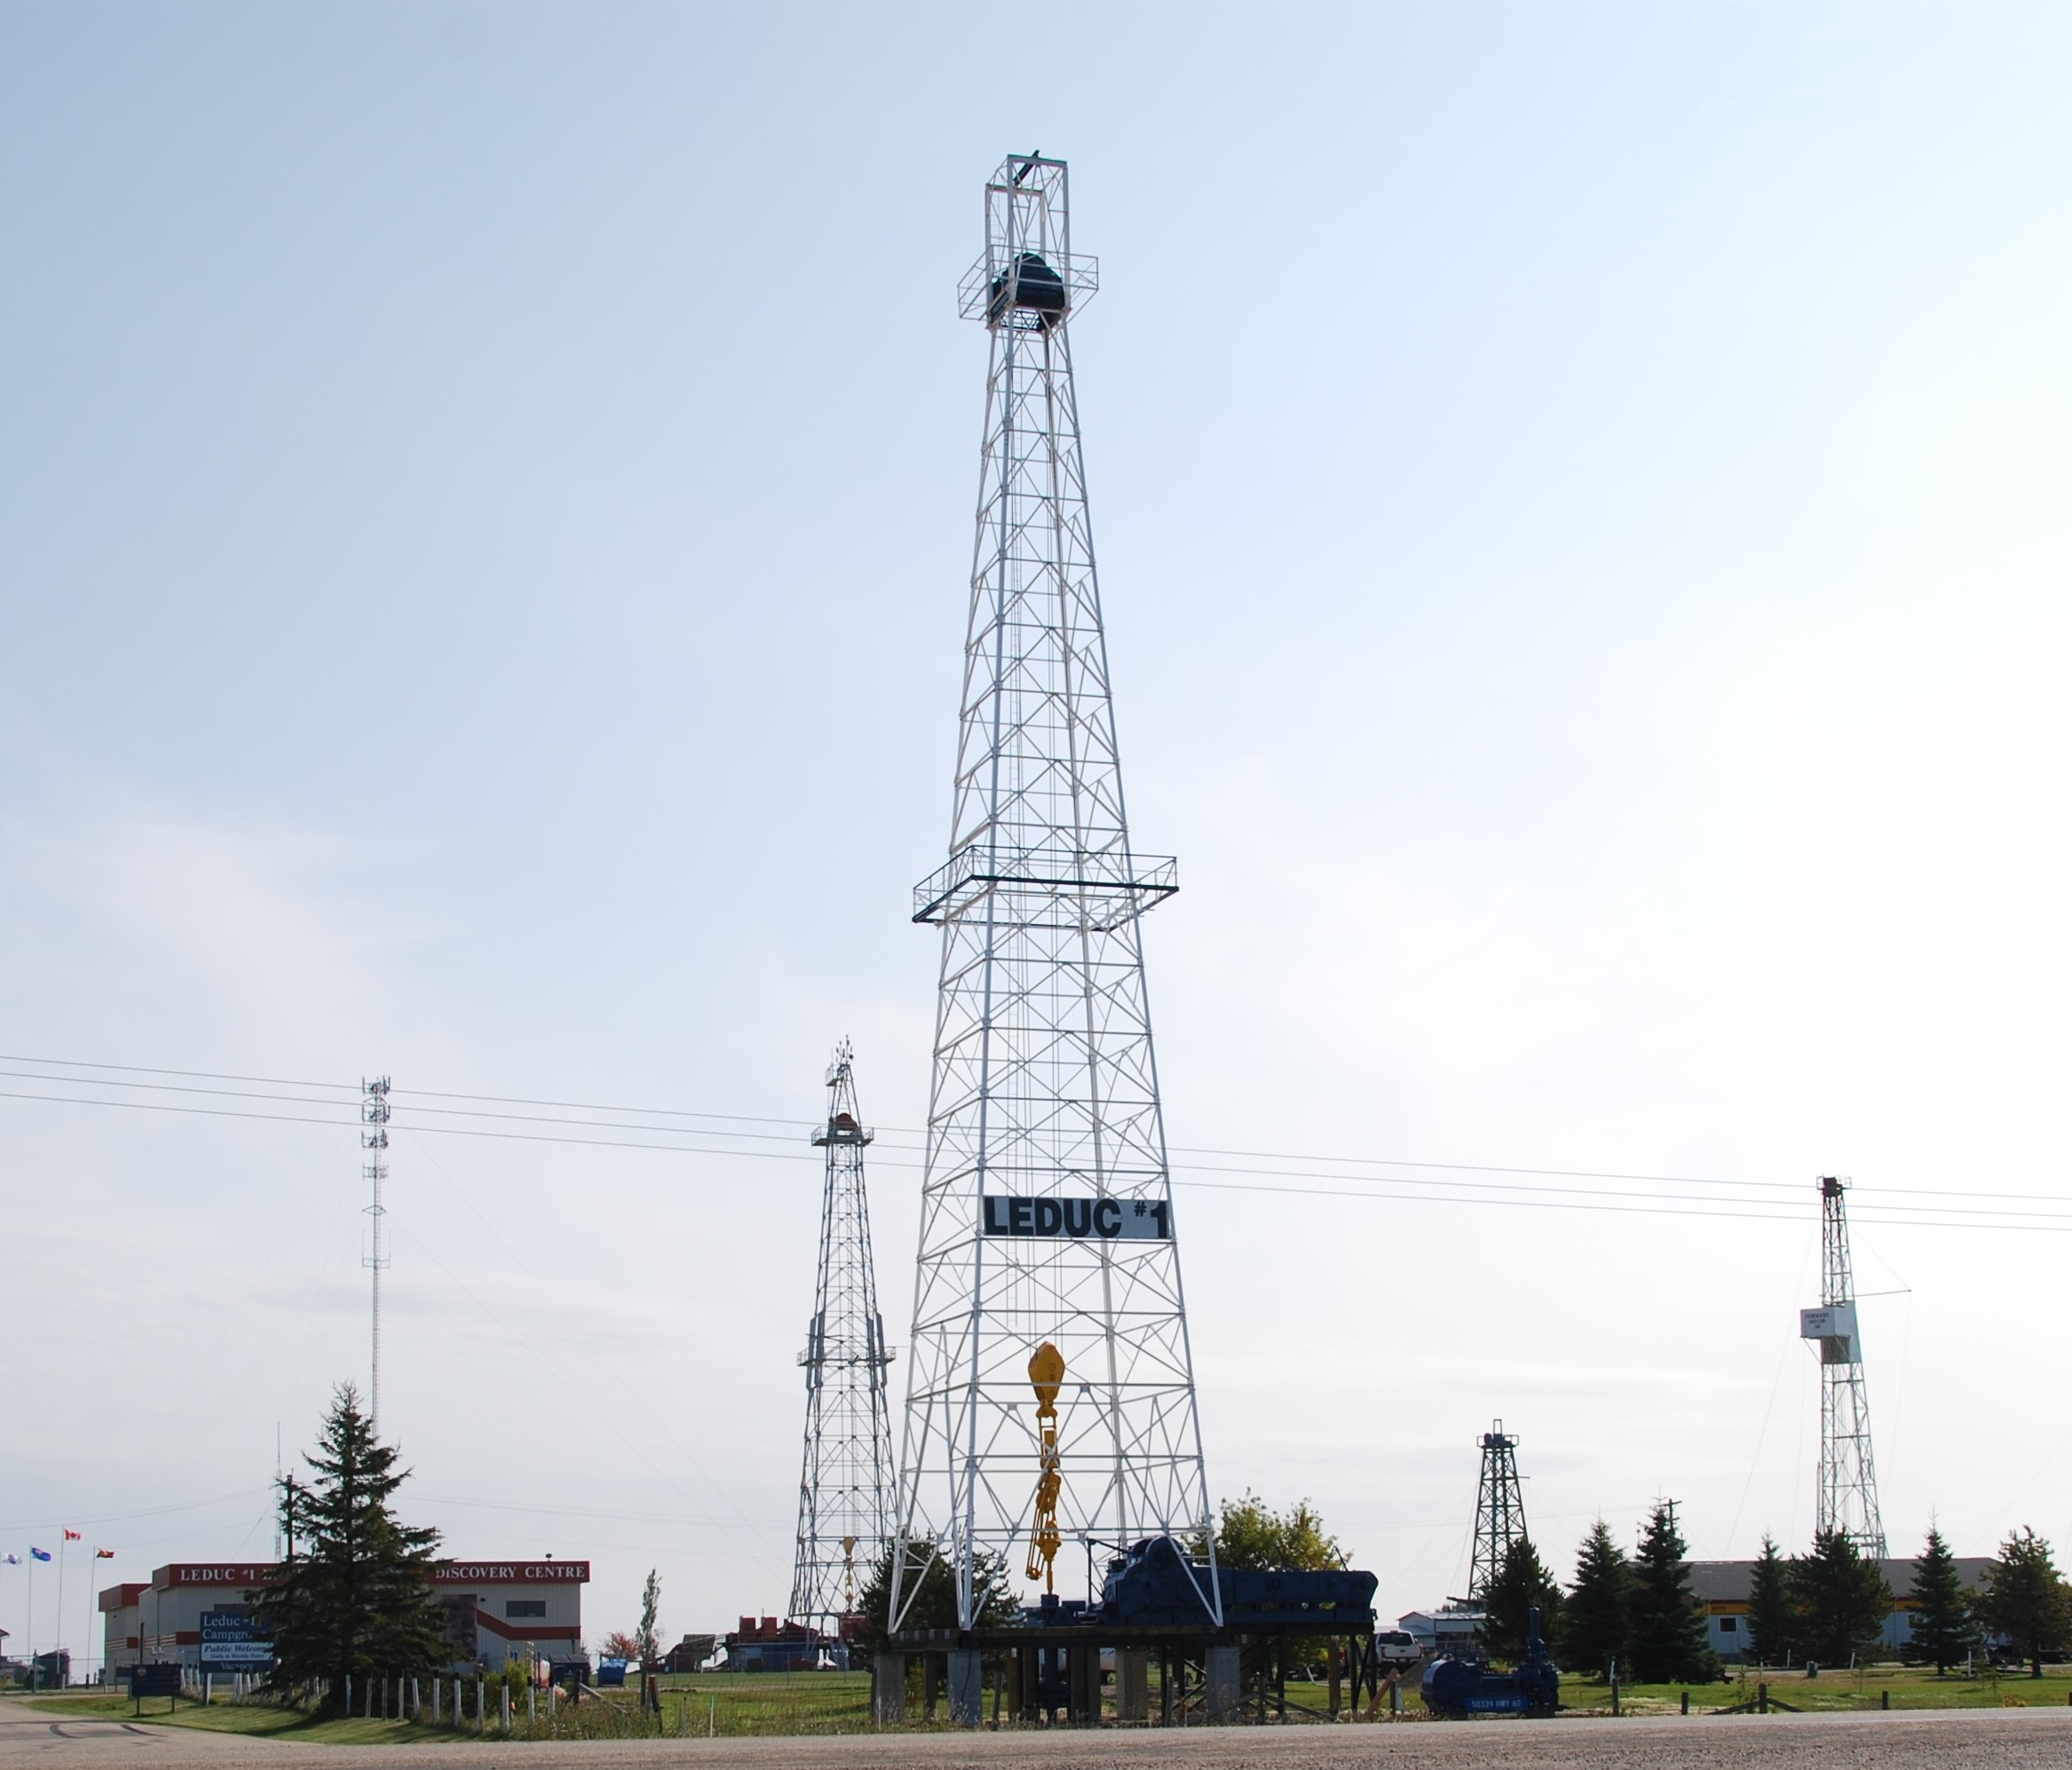 Oil derricks at the Canadian Energy Museum in Leduc County, Alberta